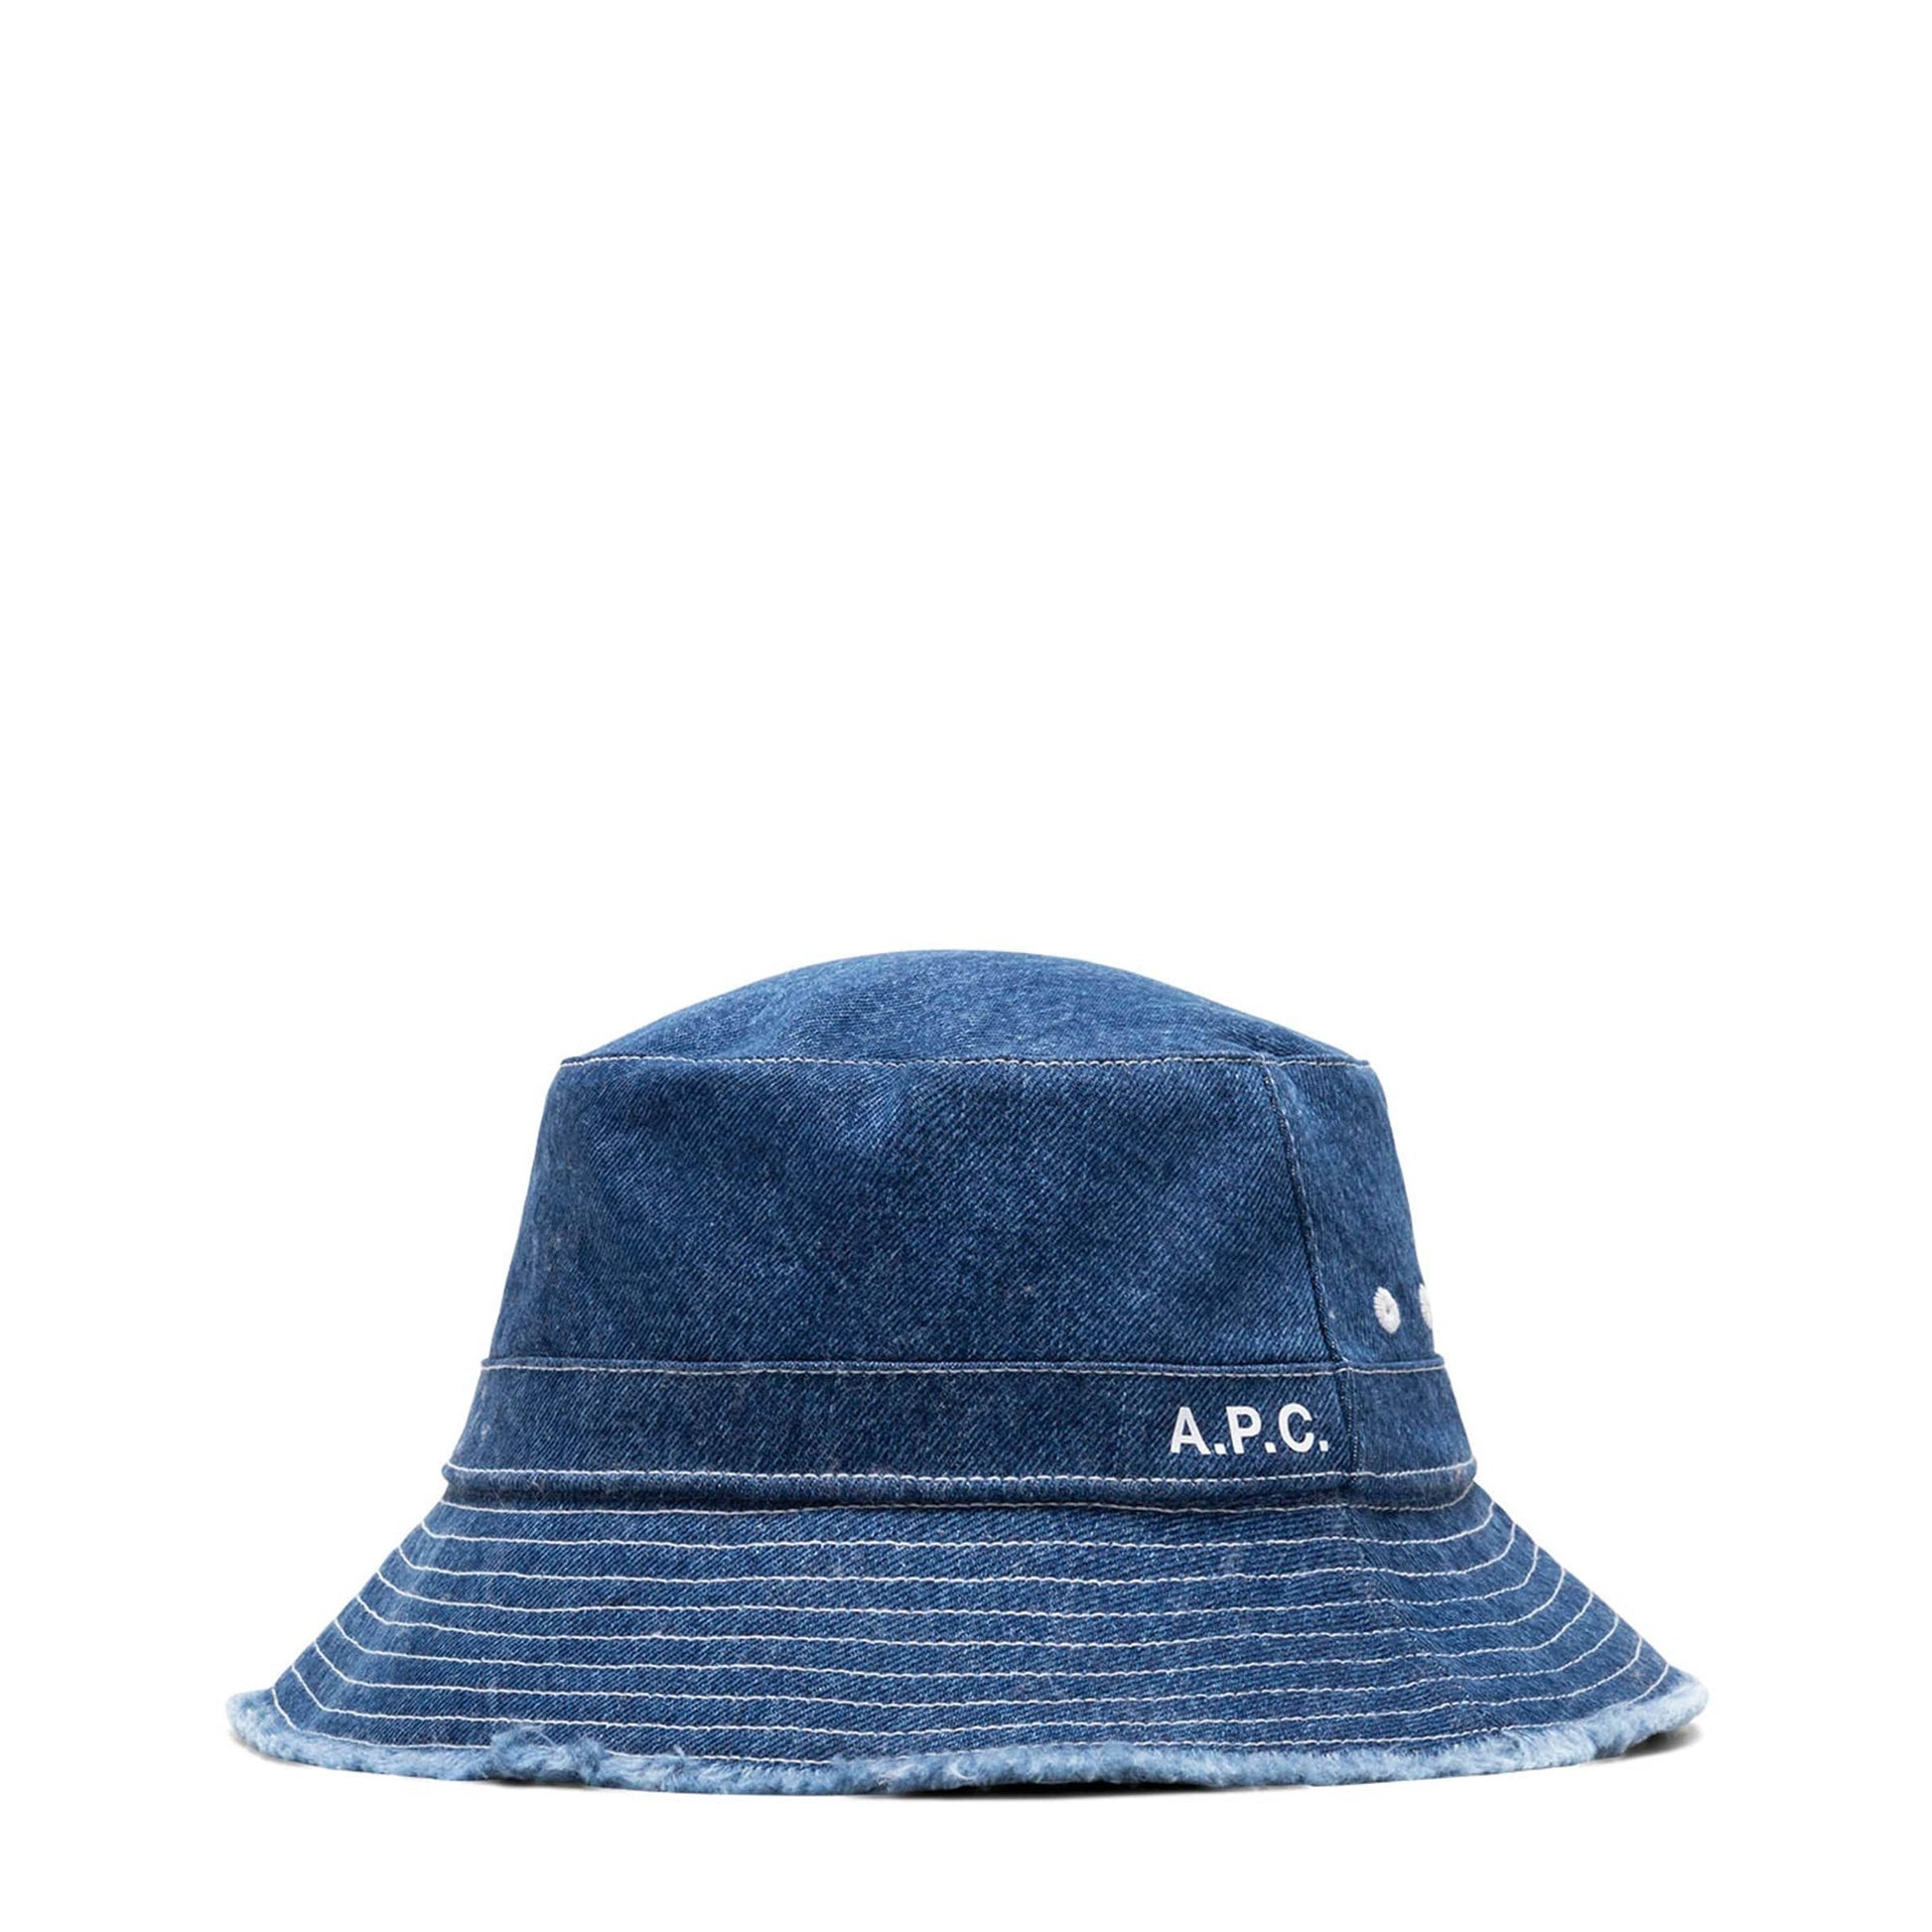 A.P.C. Headwear BOB MARK VACANCES BUCKET HAT